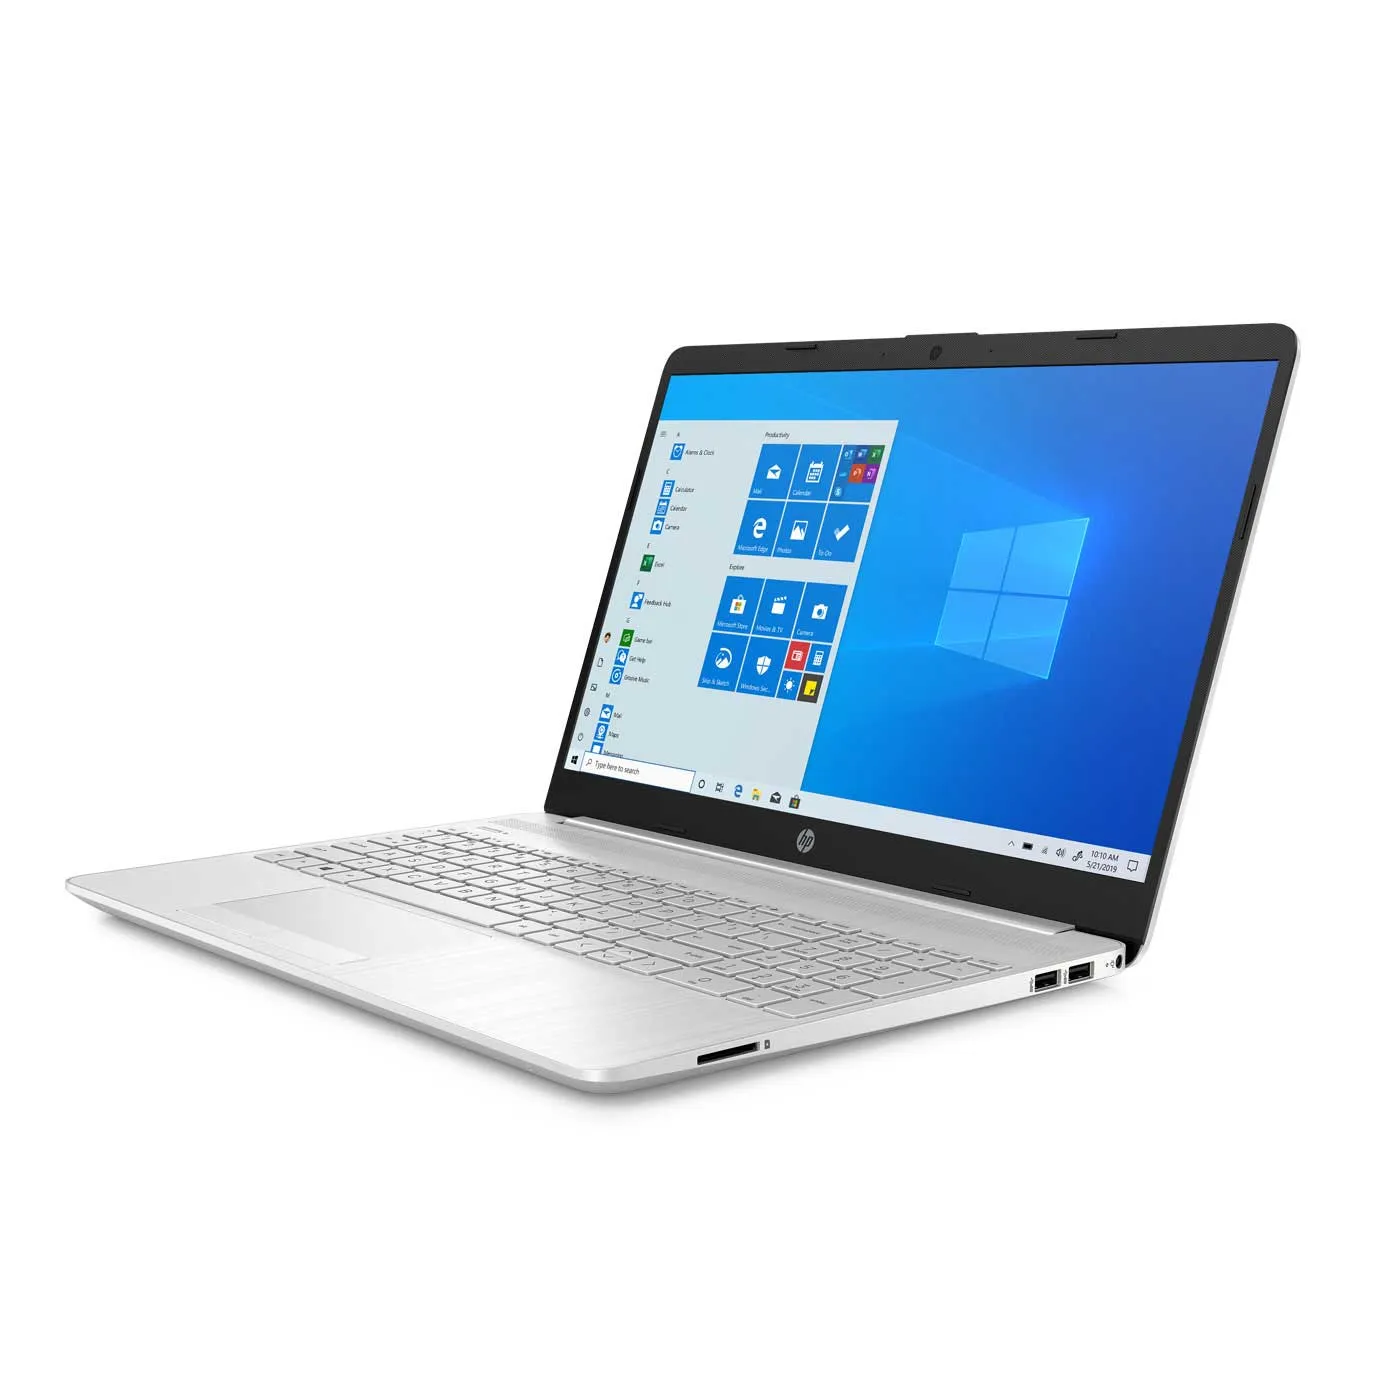 Computador Portátil HP 15,6" Pulgadas dw1073 - Intel Core i7 - RAM 8GB - Disco SSD 256 GB - Plata